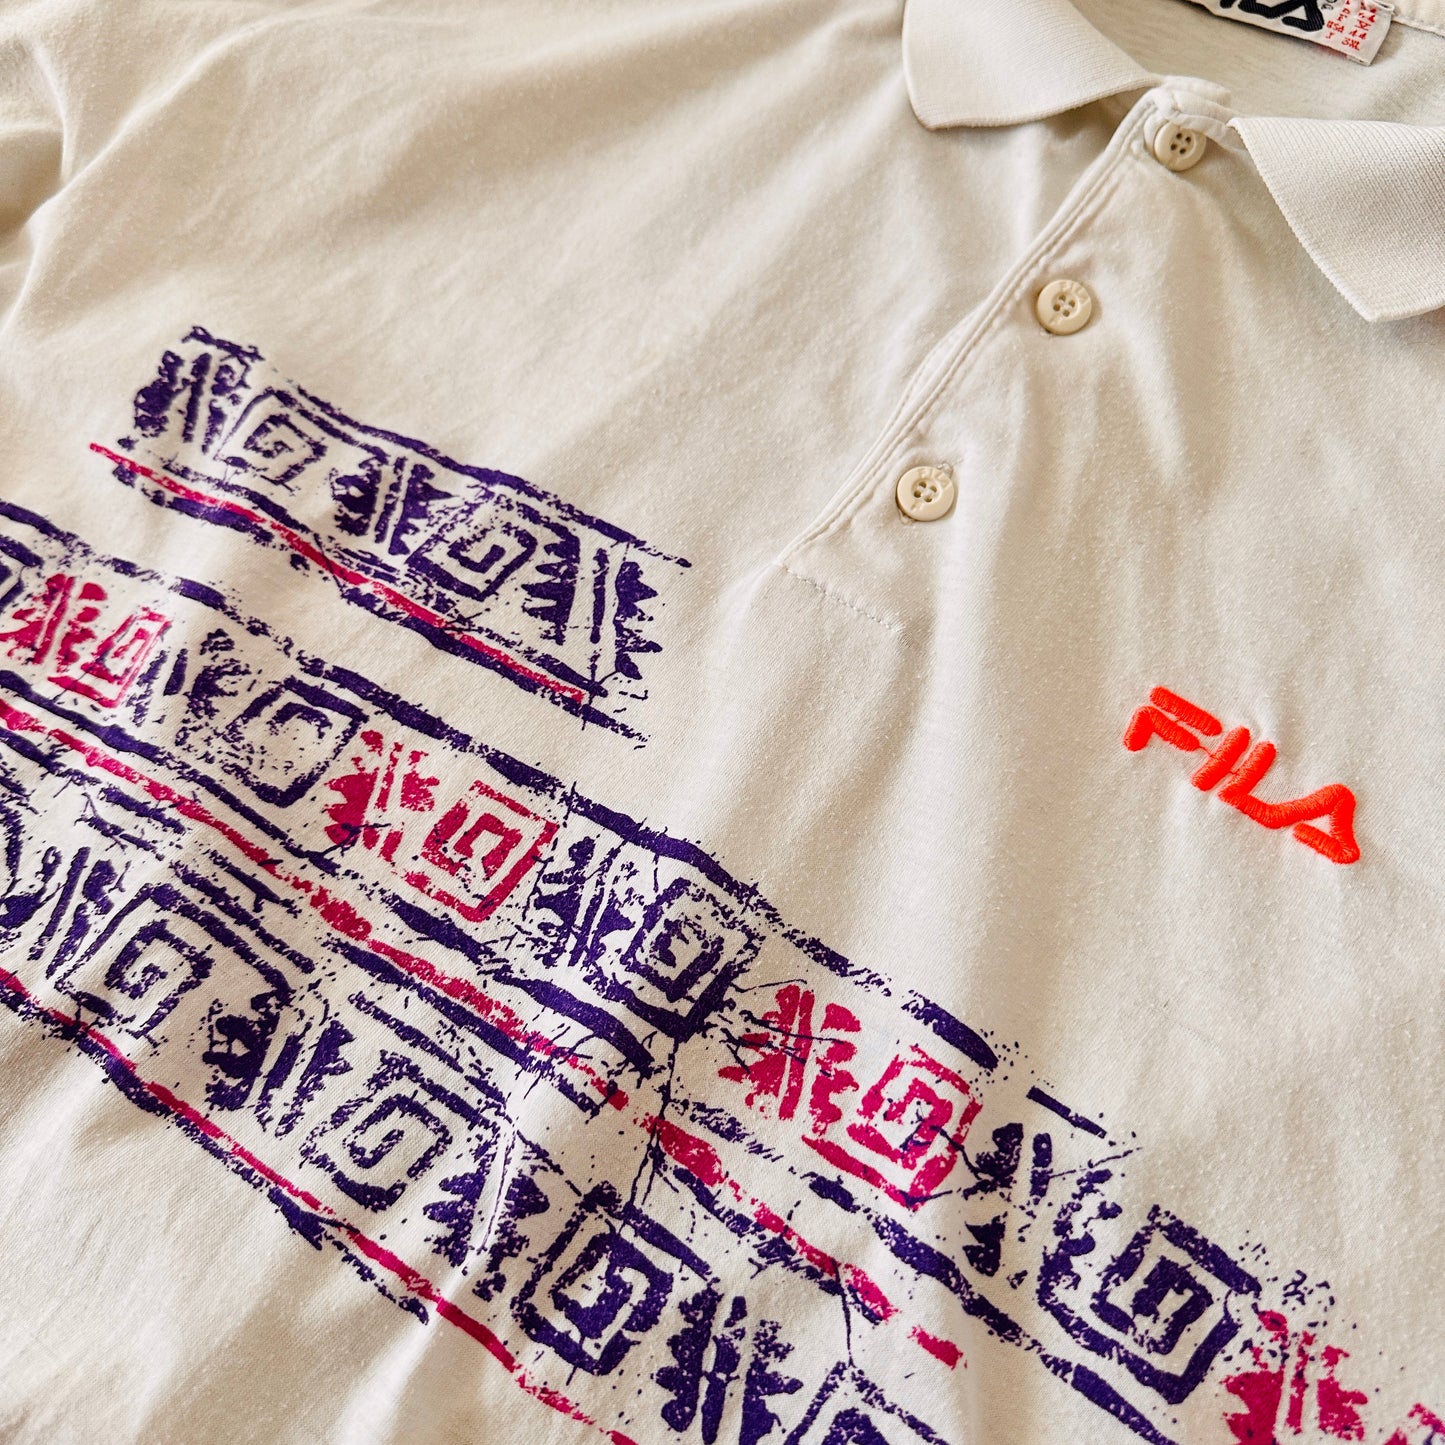 Fila Vintage 80s Tennis Polo Shirt - 54 / XL - Made in Italy